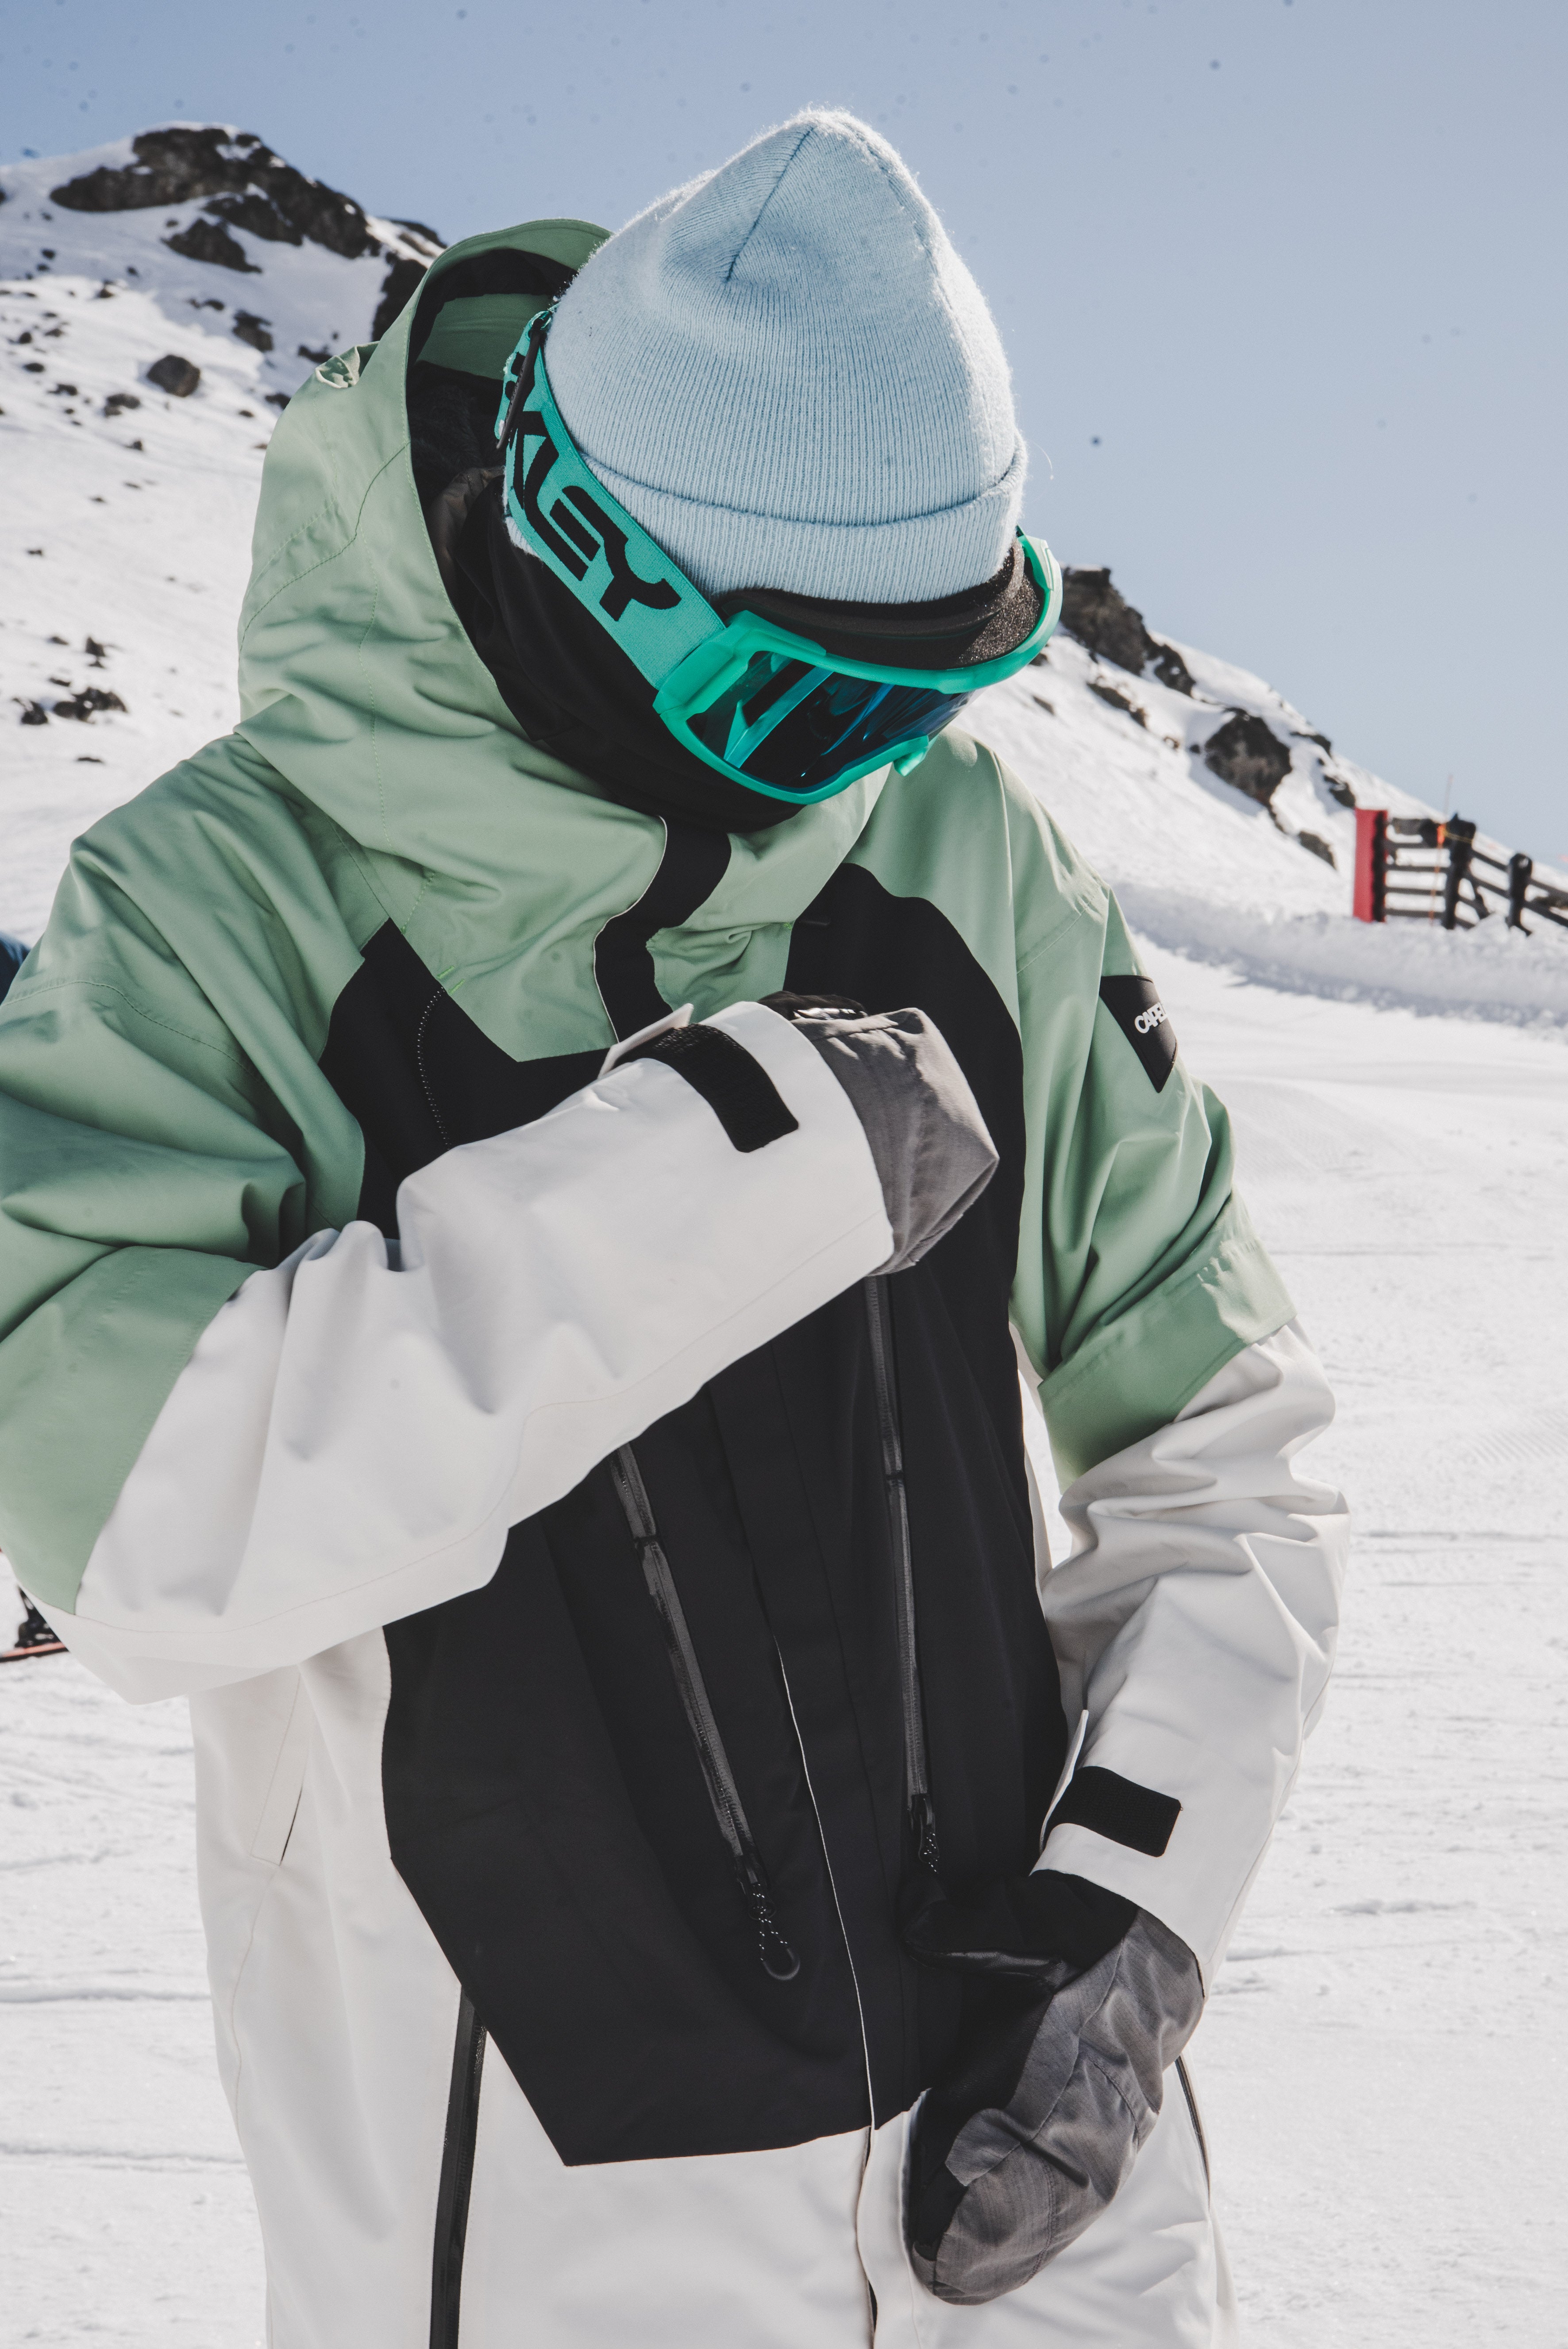 Are Ski Jackets Waterproof?